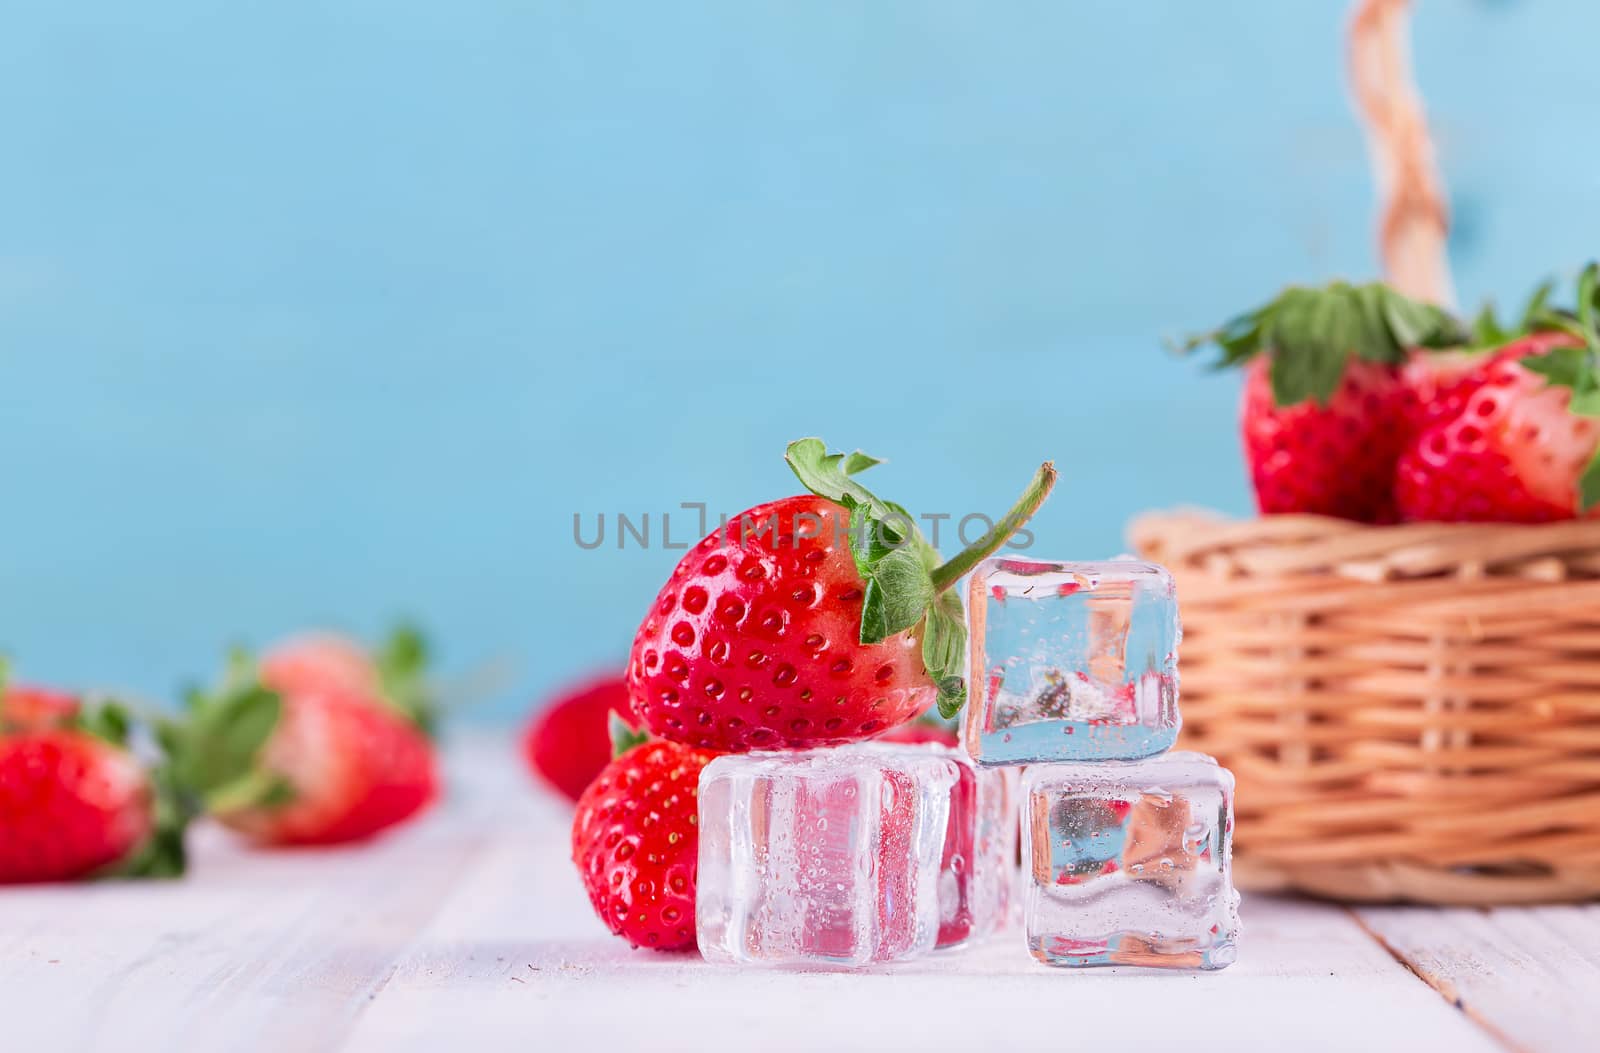 Three strawberries with strawberry leaf